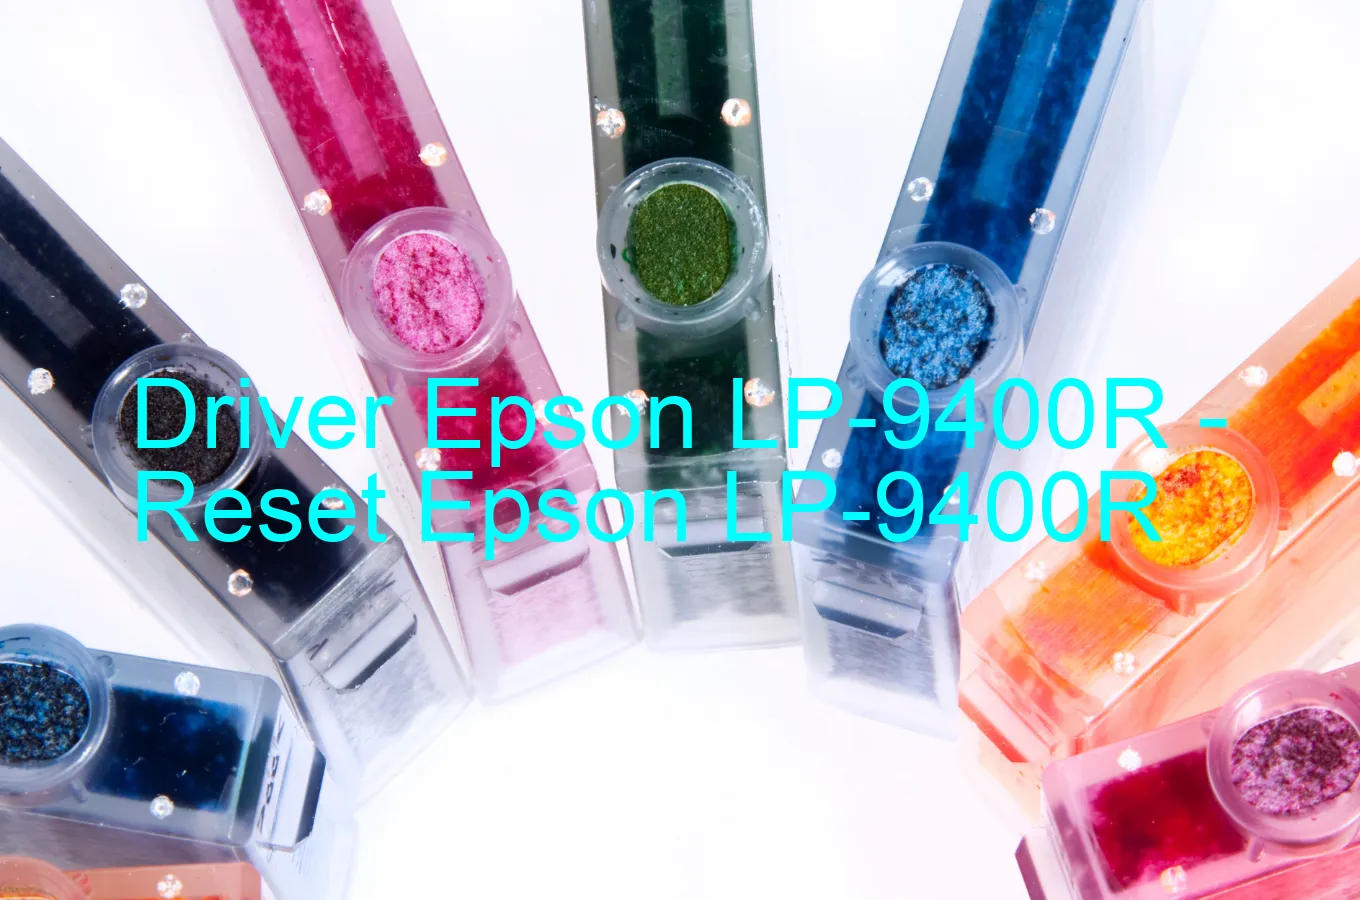 Epson LP-9400Rのドライバー、Epson LP-9400Rのリセットソフトウェア